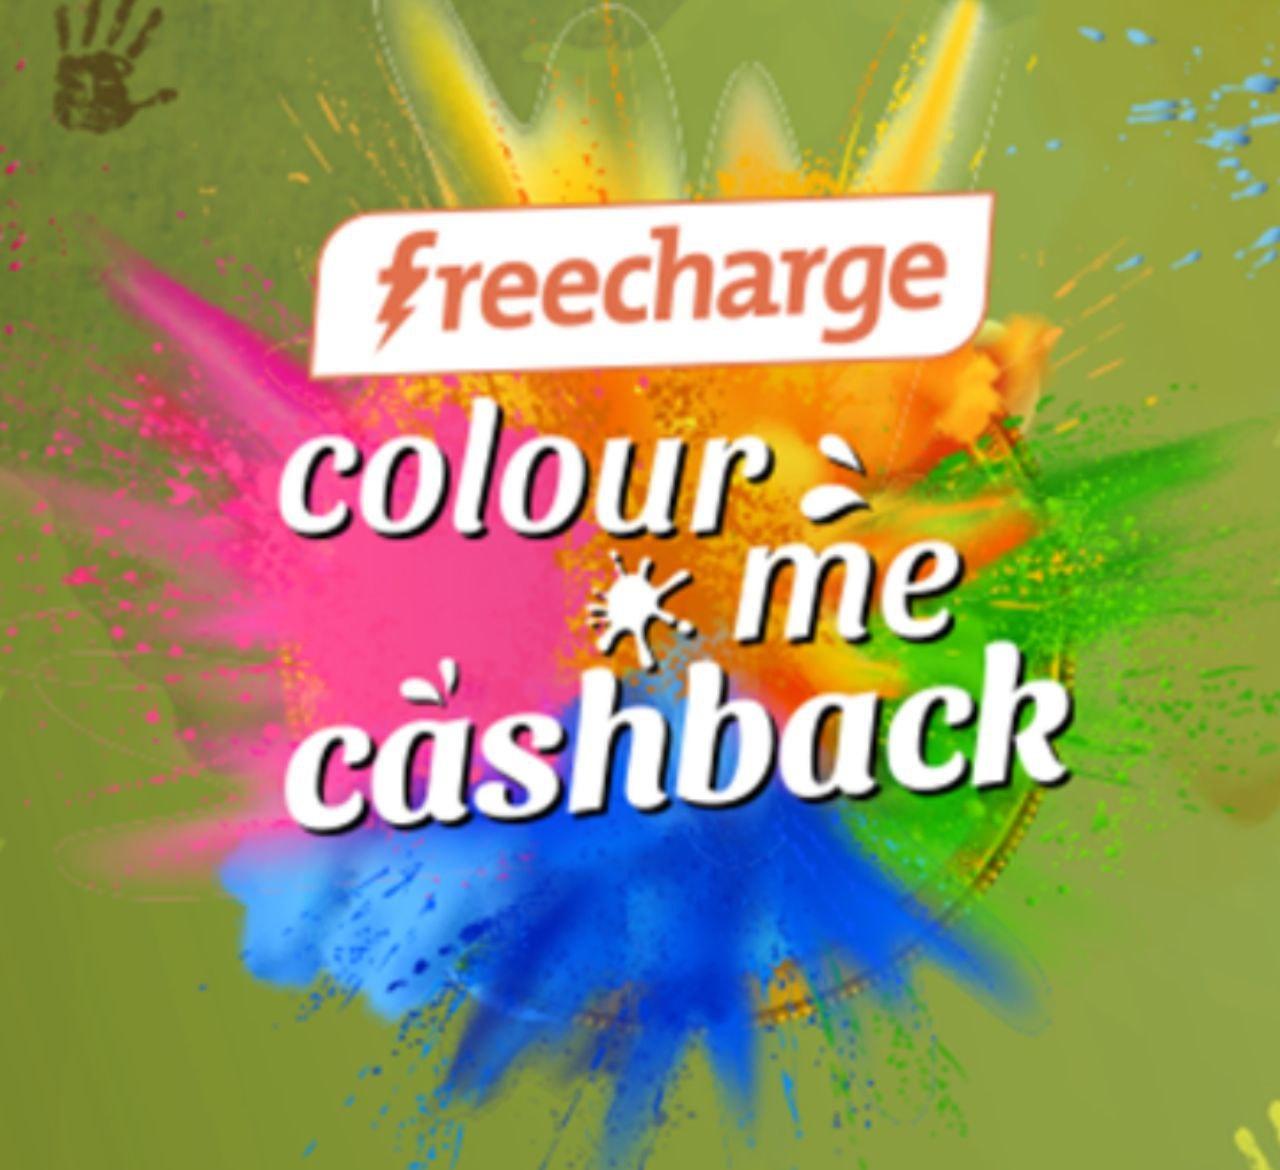 Freecharge Holi Colour Me Cashback Offer